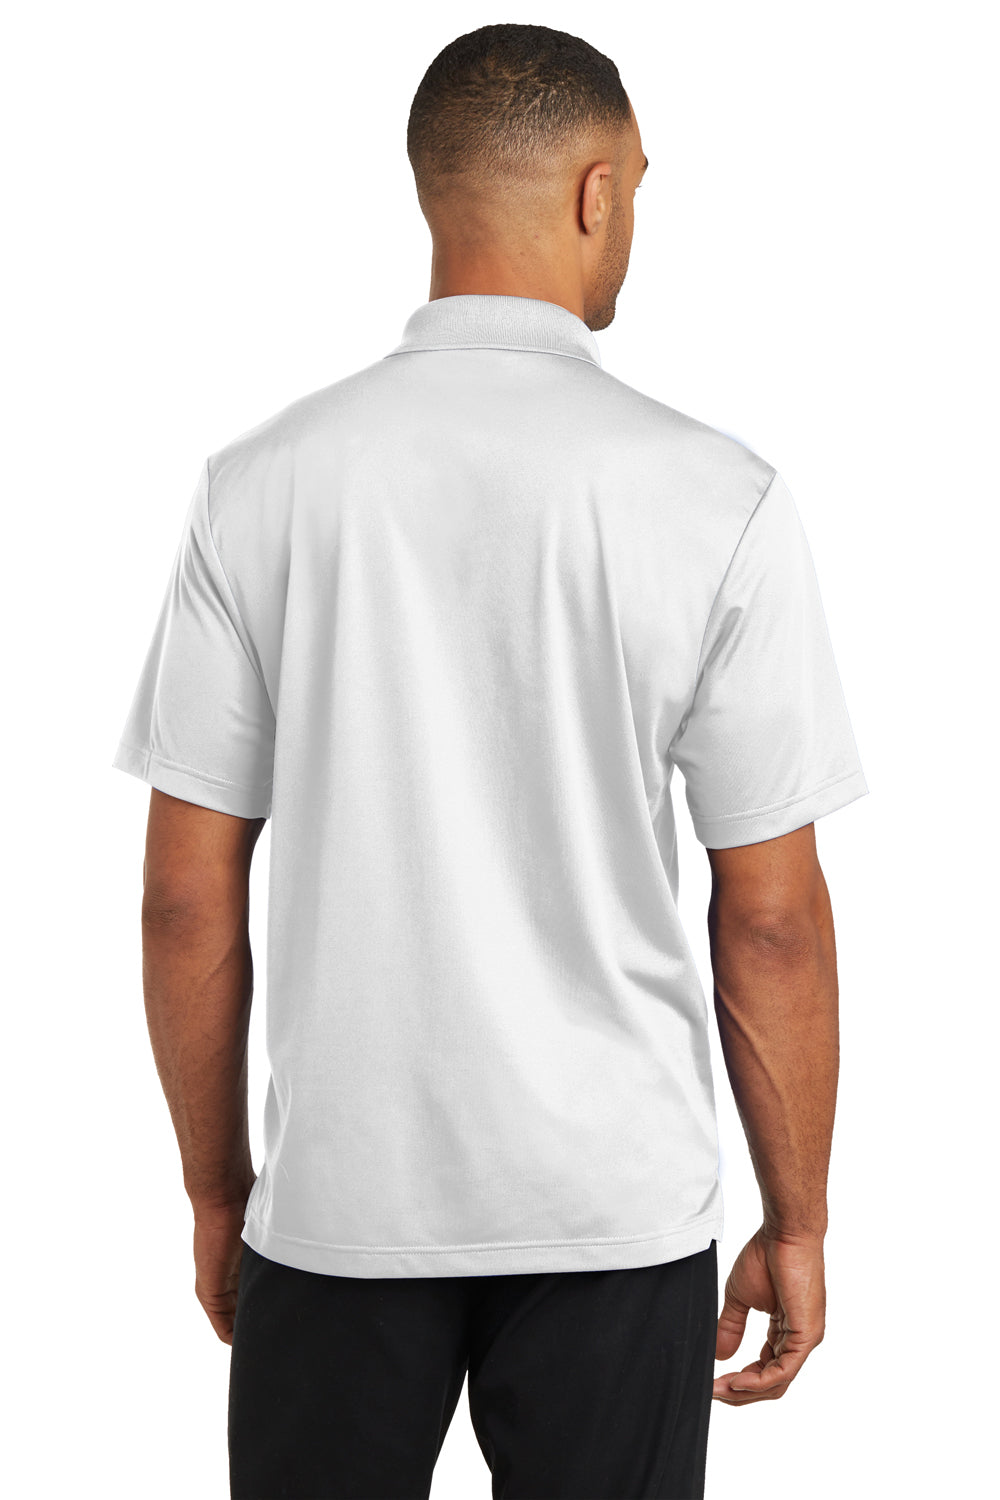 CornerStone CS421 Mens Gripper Moisture Wicking Short Sleeve Polo Shirt White Back